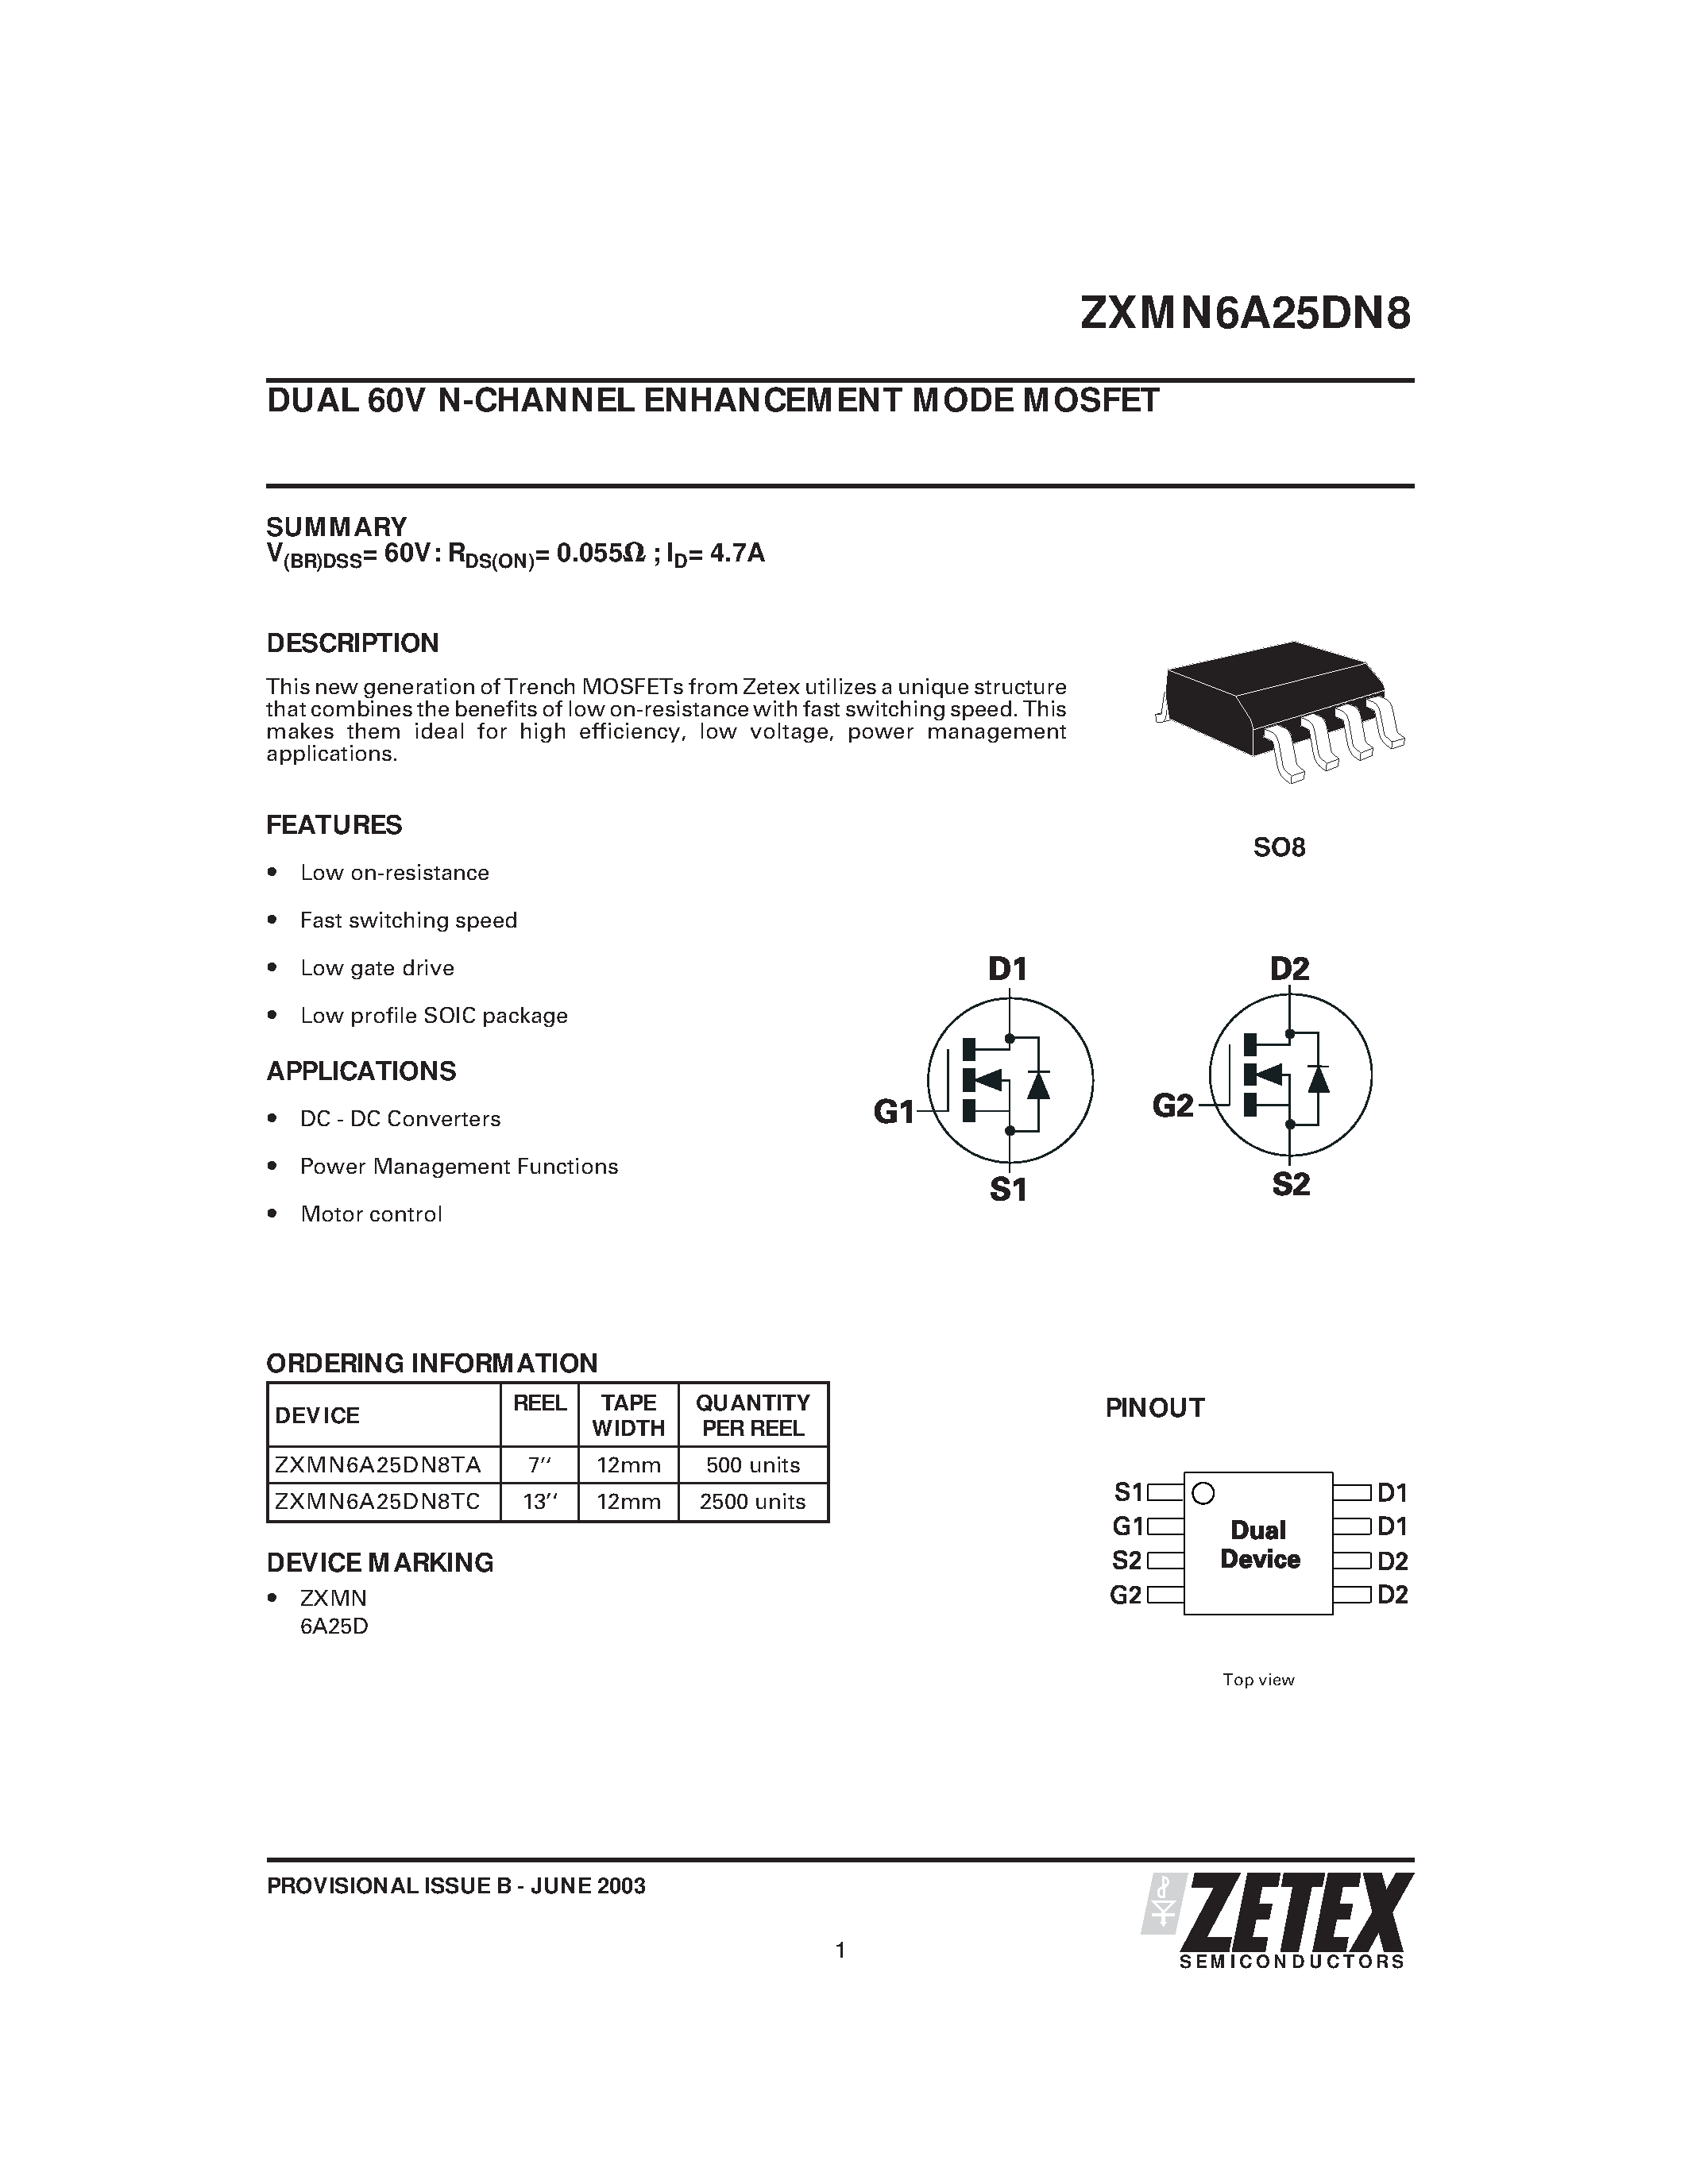 Datasheet ZXMN6A25DN8 - DUAL 60V N-CHANNEL ENHANCEMENT MODE MOSFET page 1